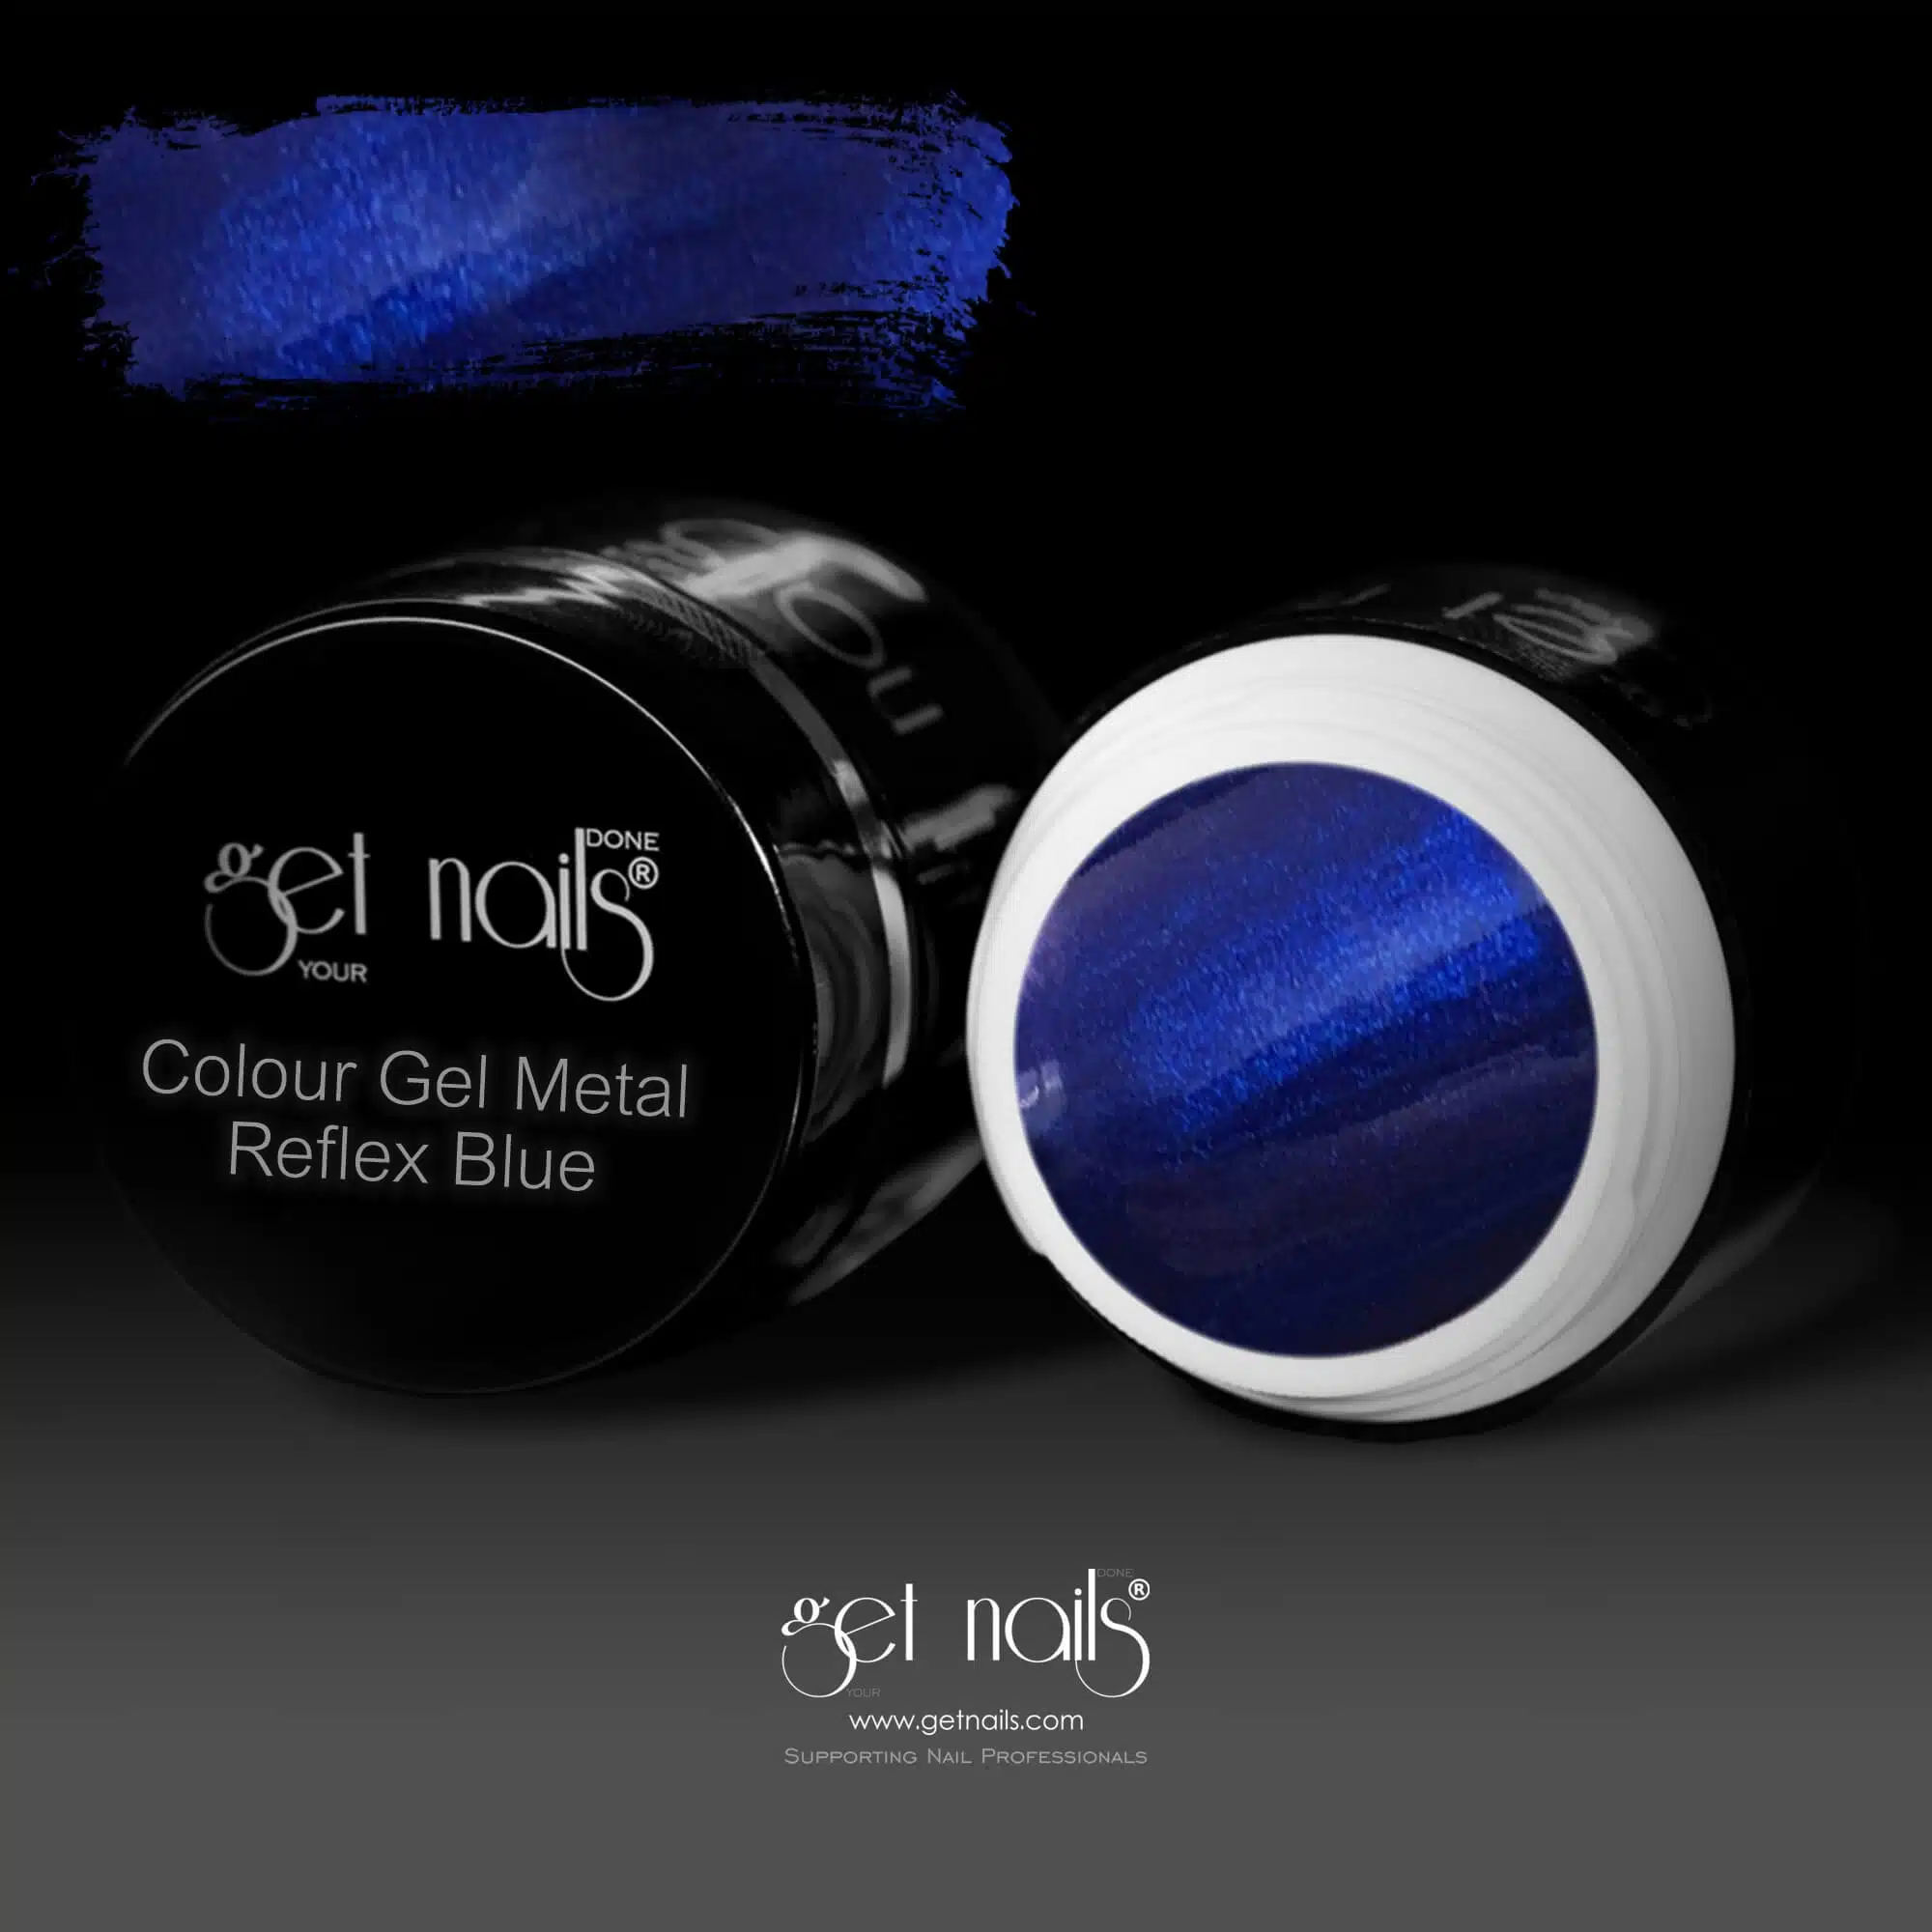 Get Nails Austria - Colour Gel Metal Reflex Blue 5g